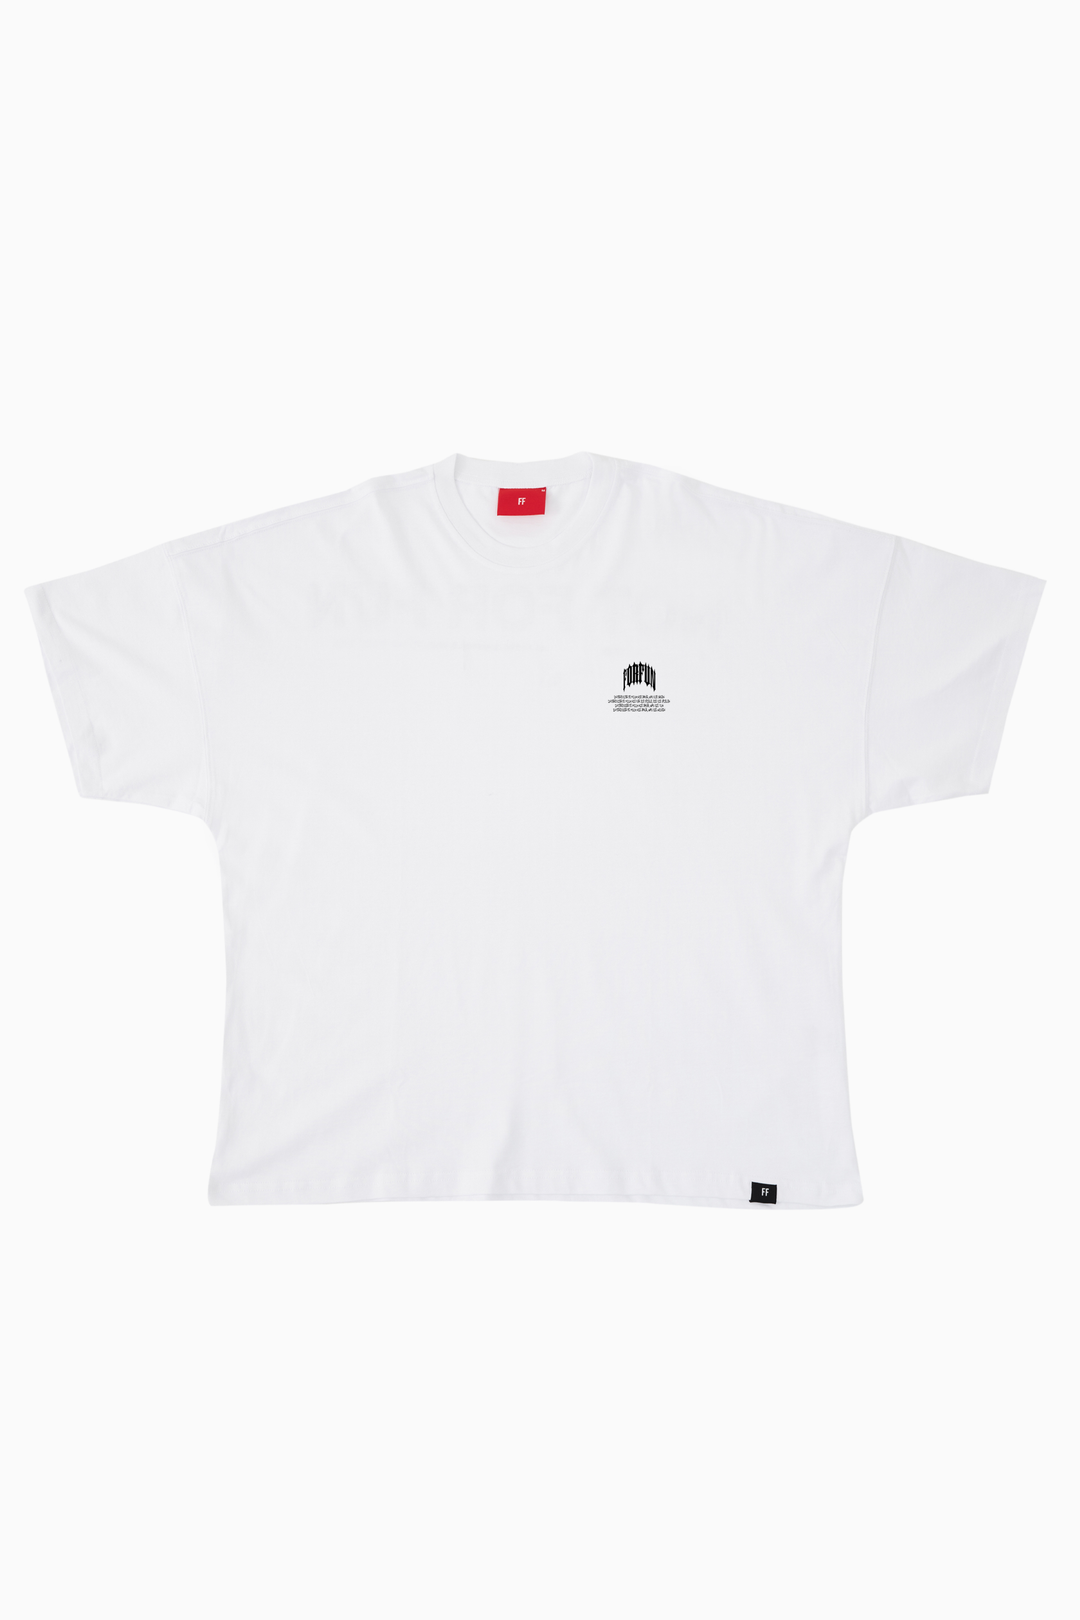 For Fun Neue / Drop Shoulder Oversize T-shirt